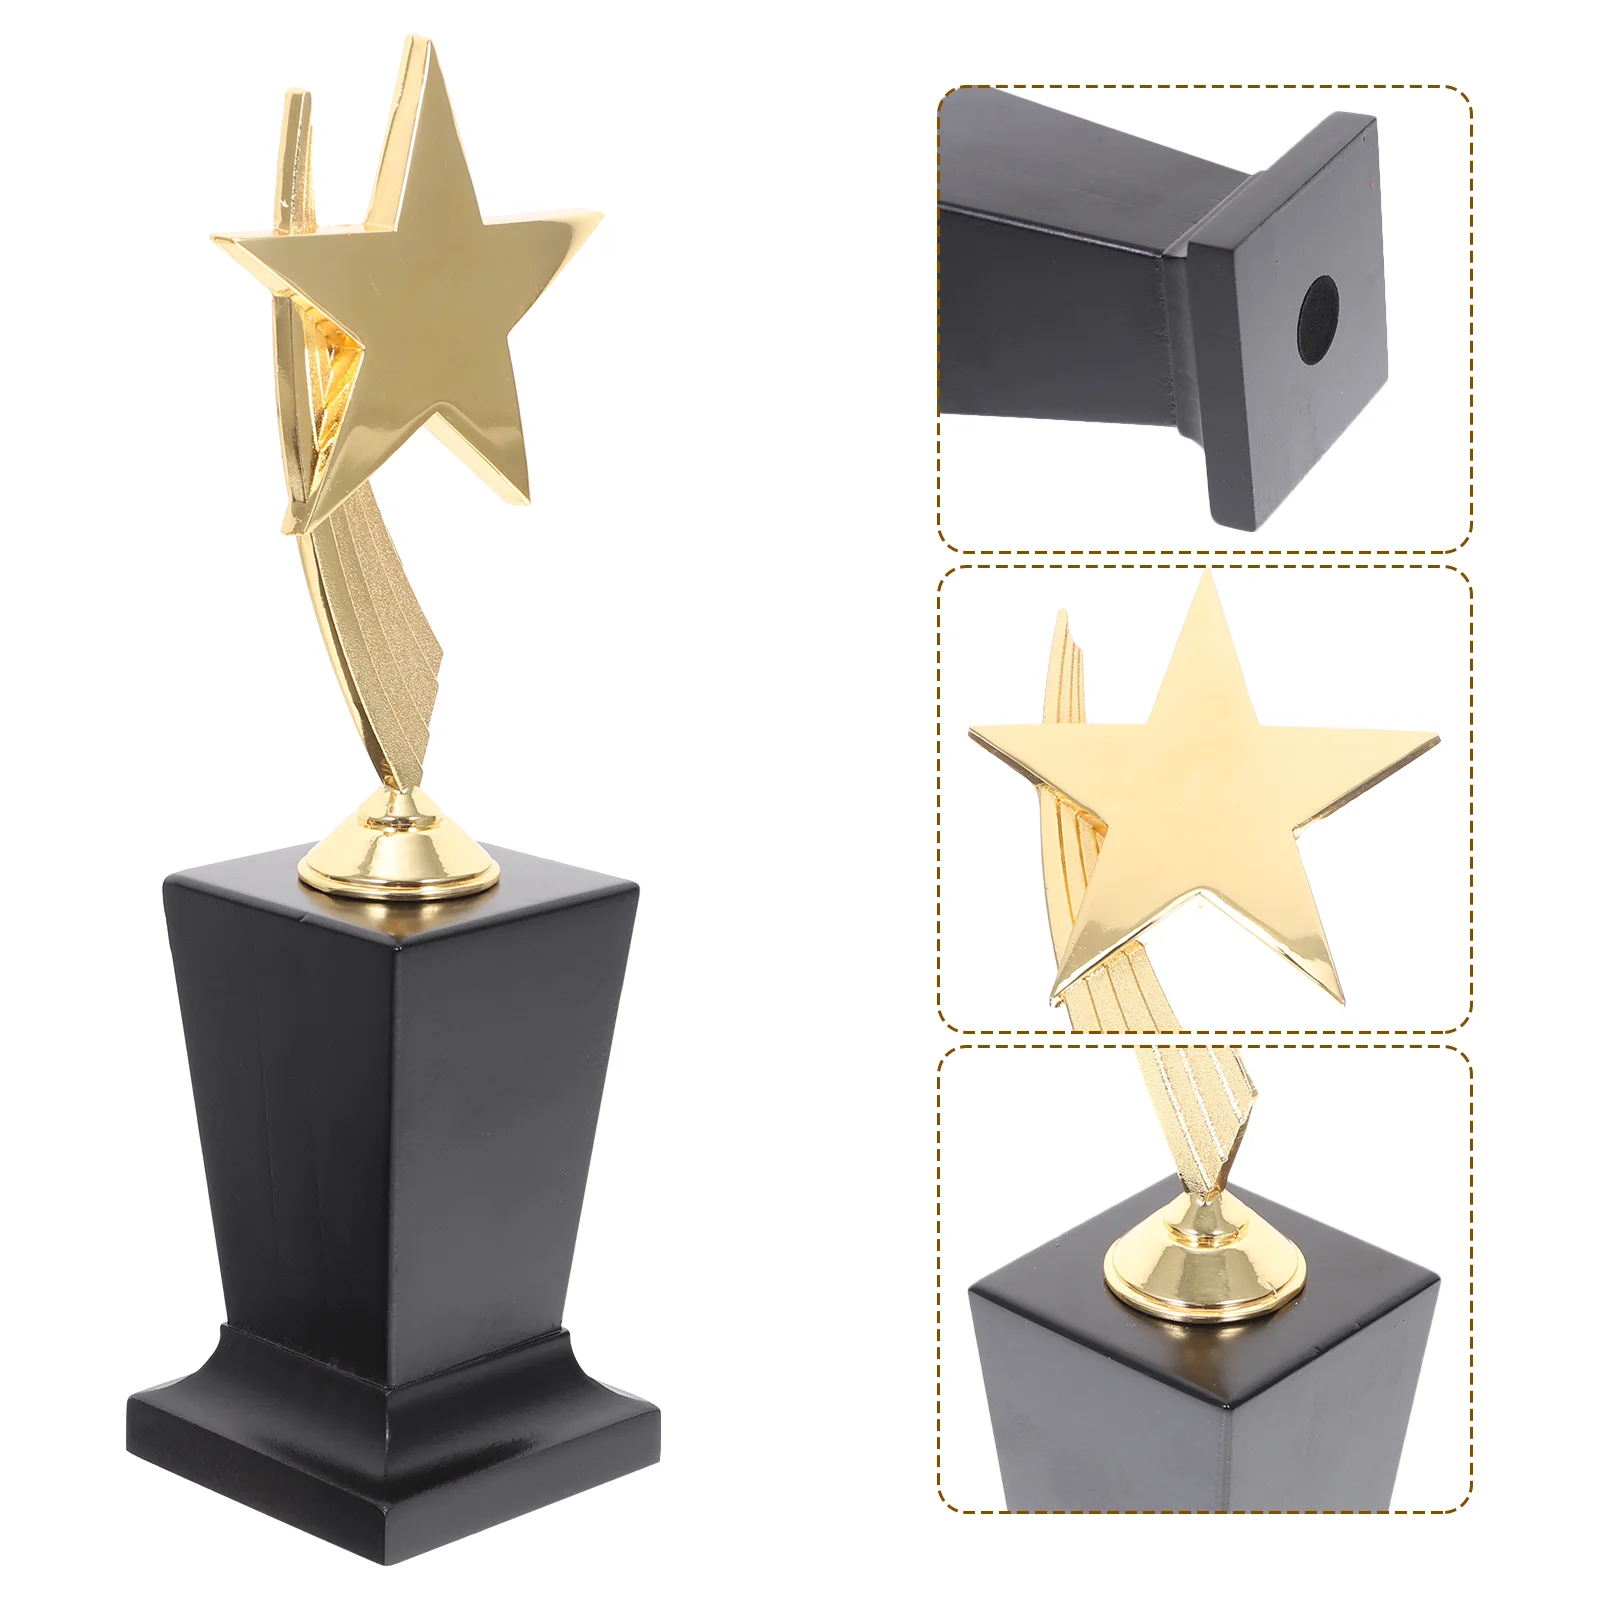 1PC Golden Star Design Award Trophy Resin Reward Prizes Decor Gift Awards Trophy for Sports Competition Games